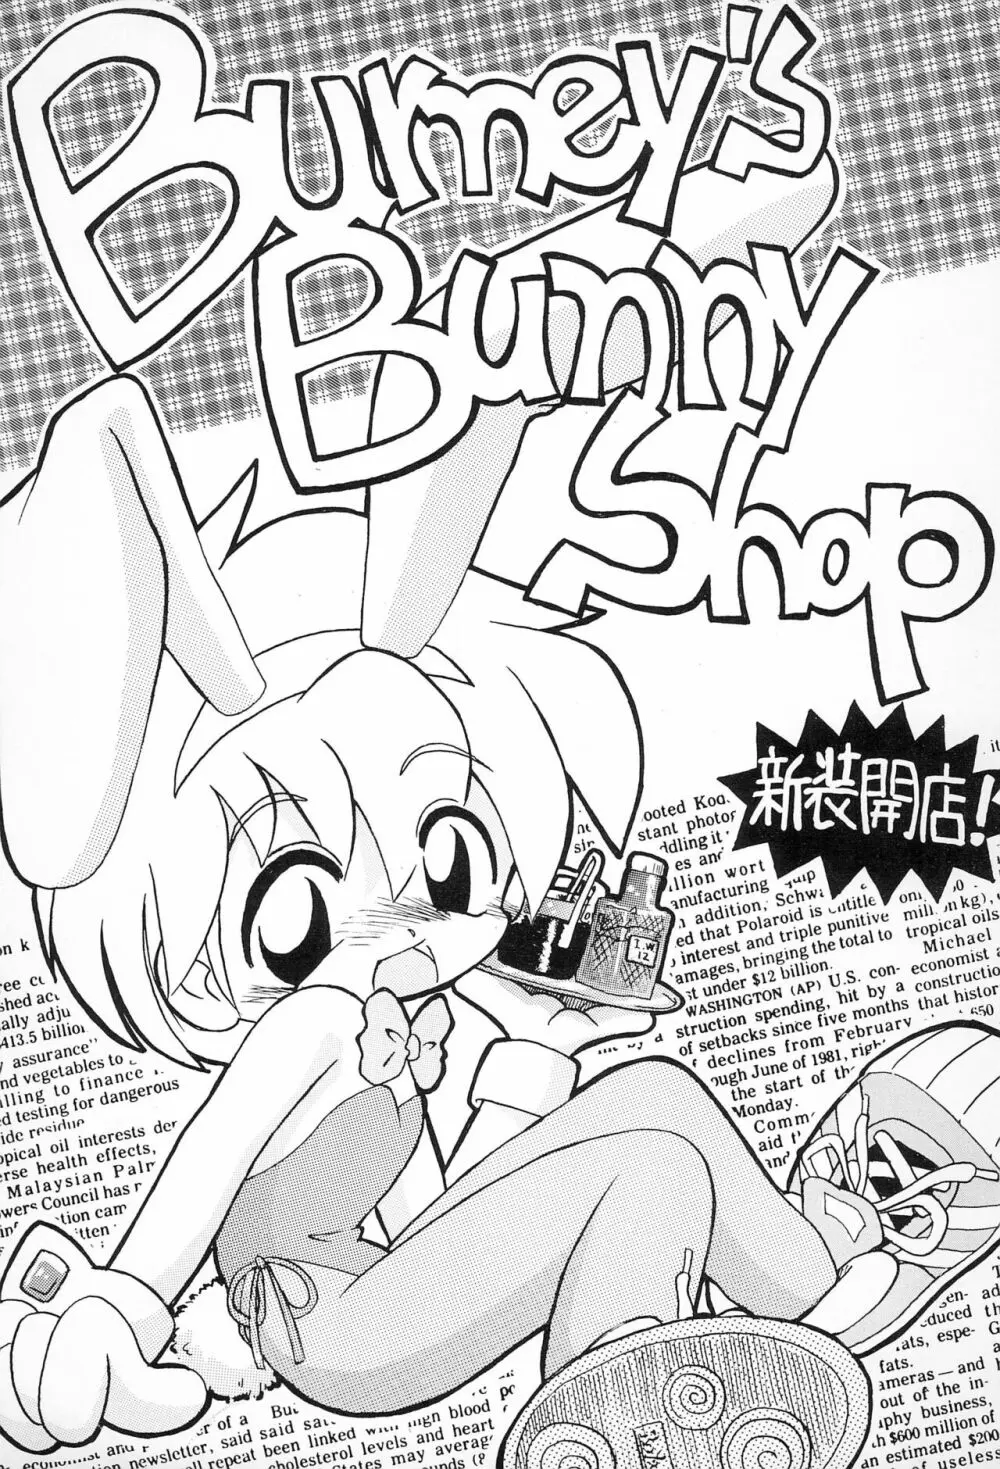 Burney’s Bunny Shop 新装開店! - page1